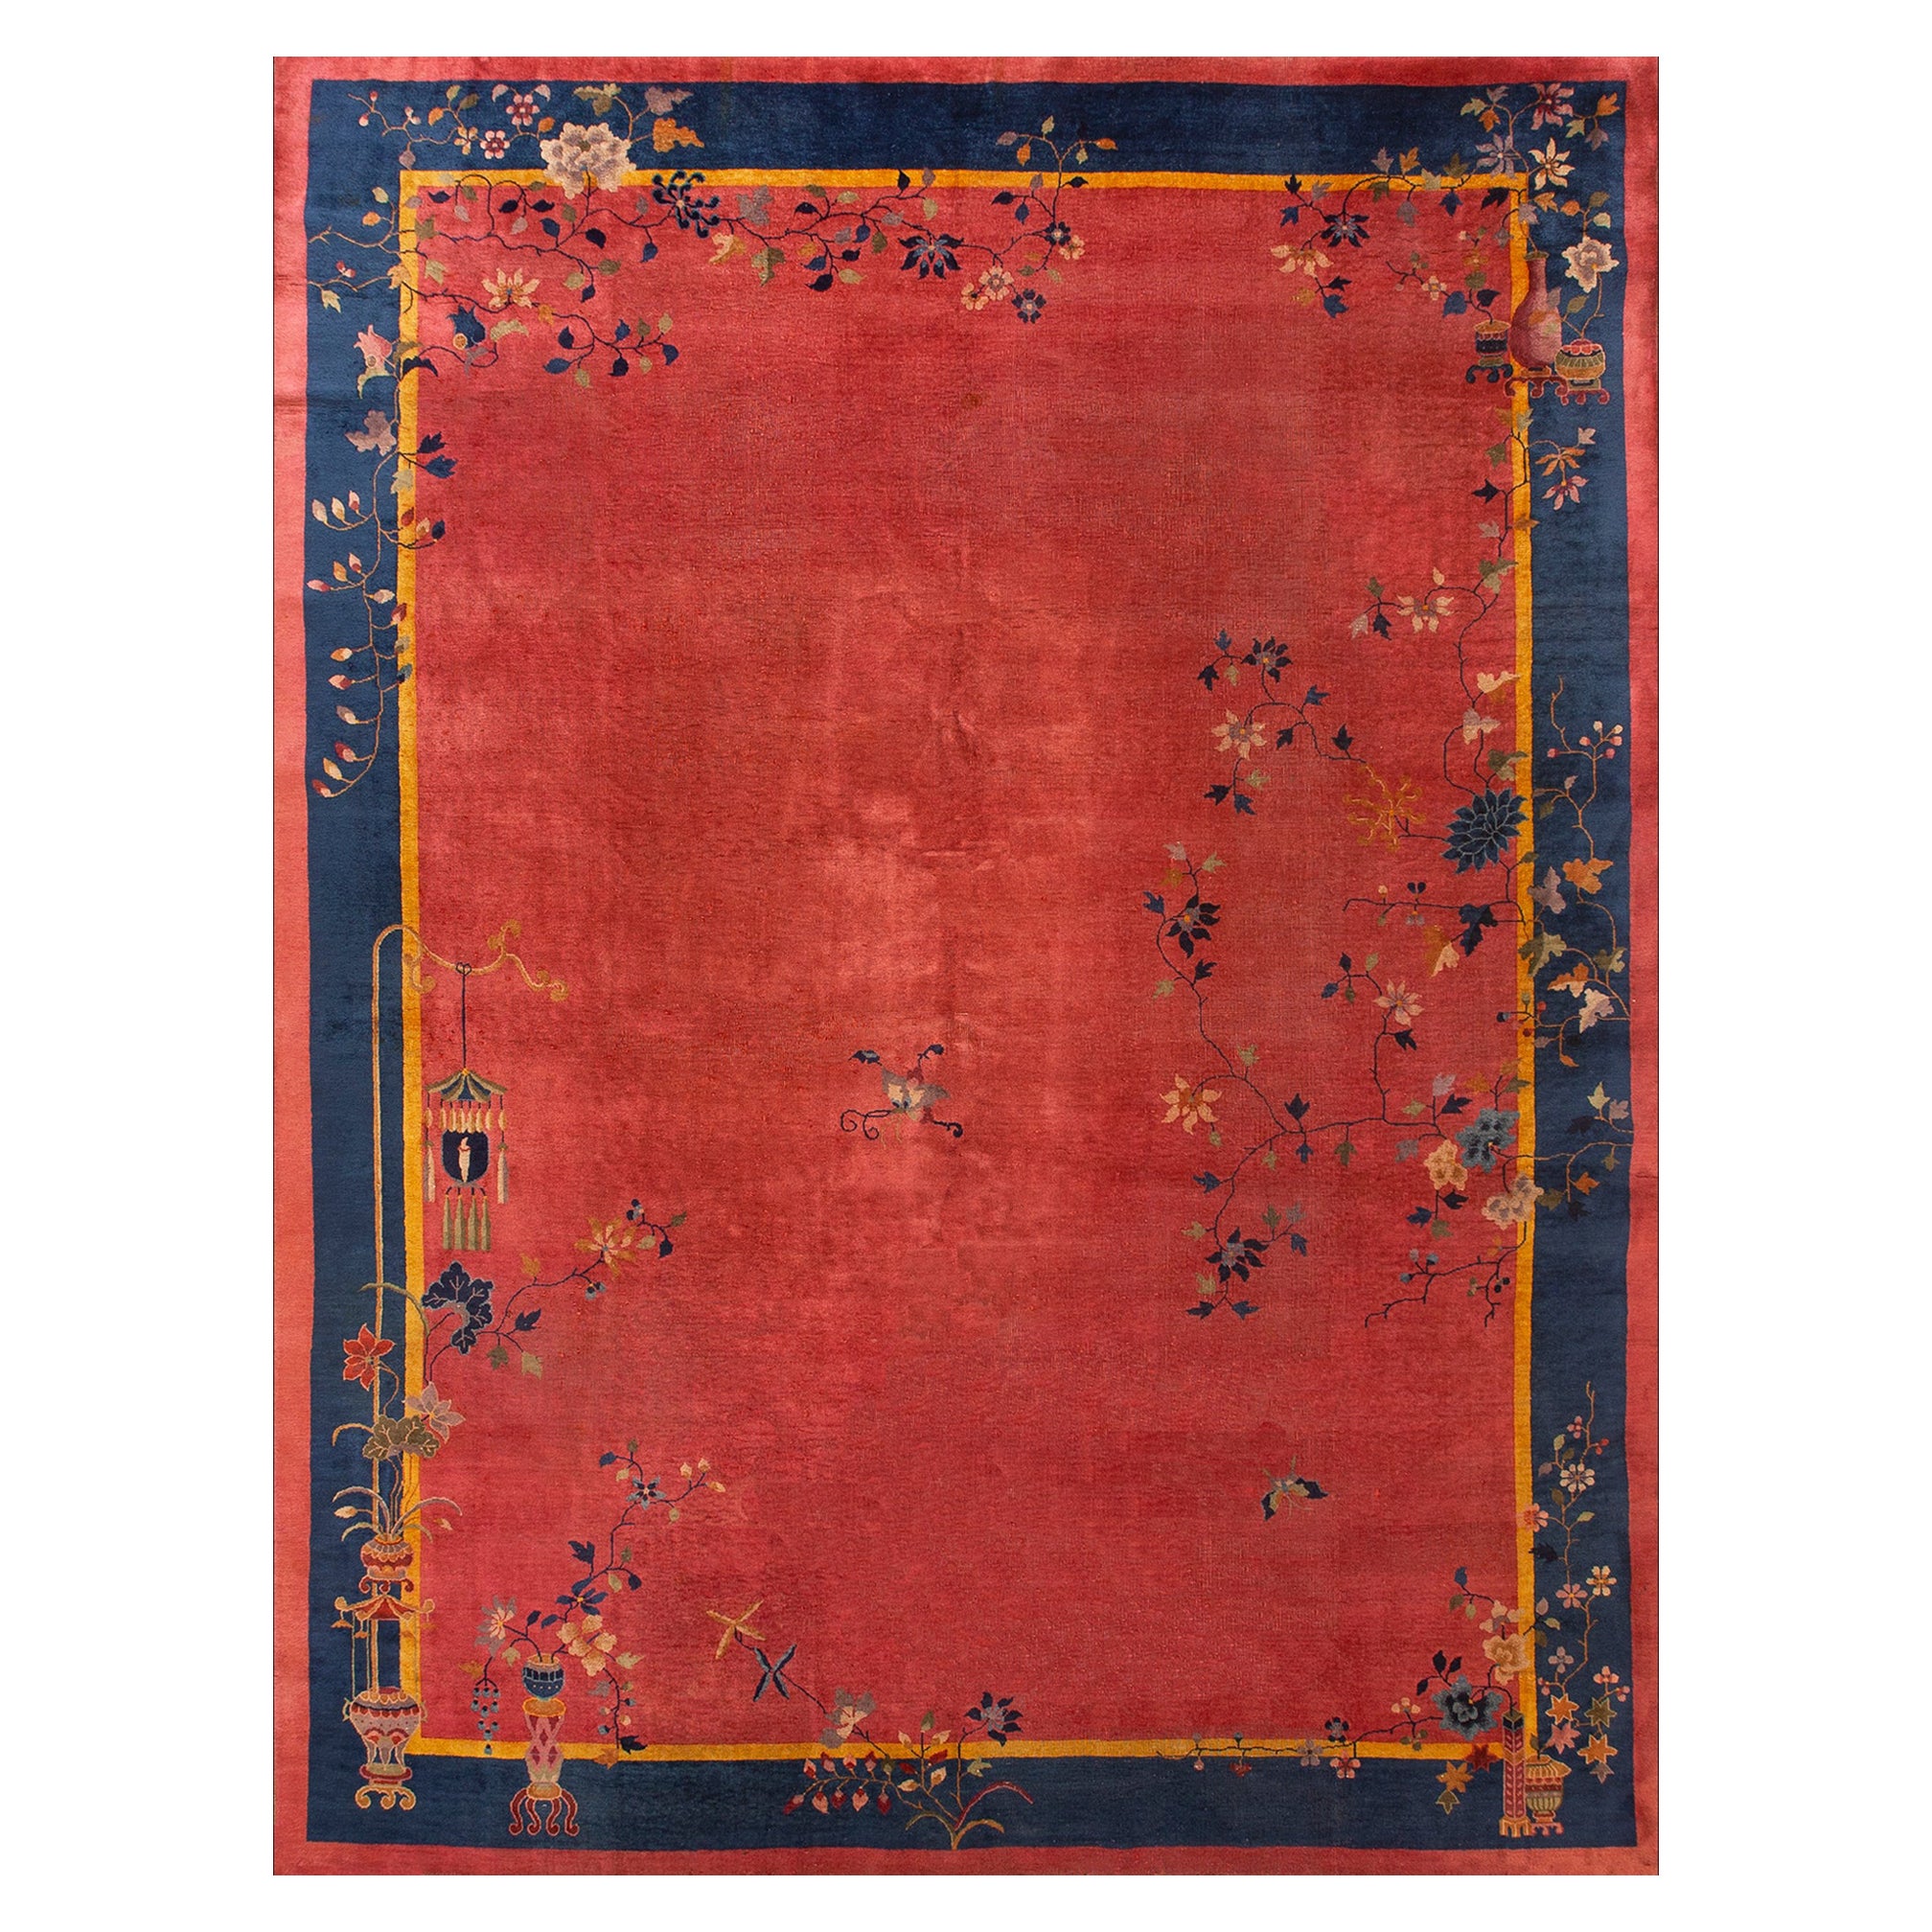 1920s Chinese Art Deco Carpet ( 10'3" x 136" - 312 x 412 cm ) For Sale